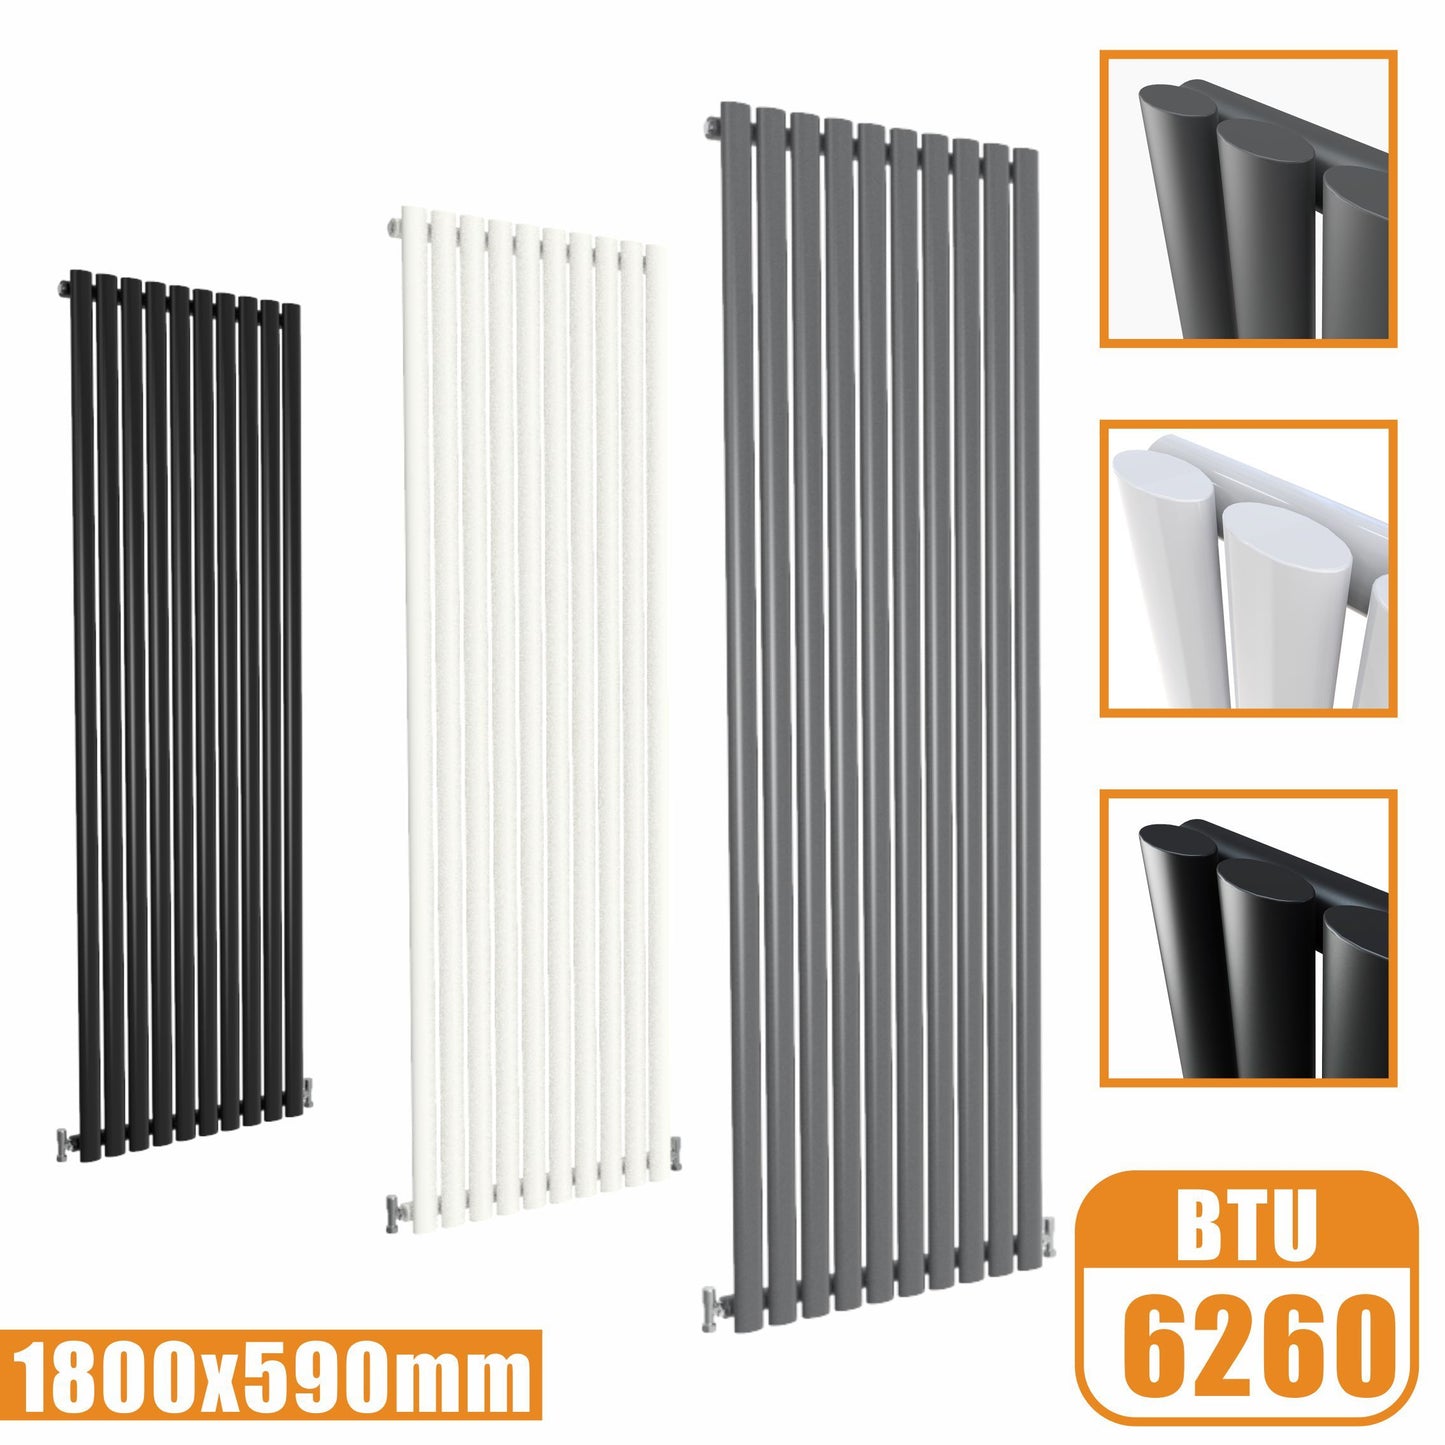 1800x590 vertical,oval column,radiators AICA rads